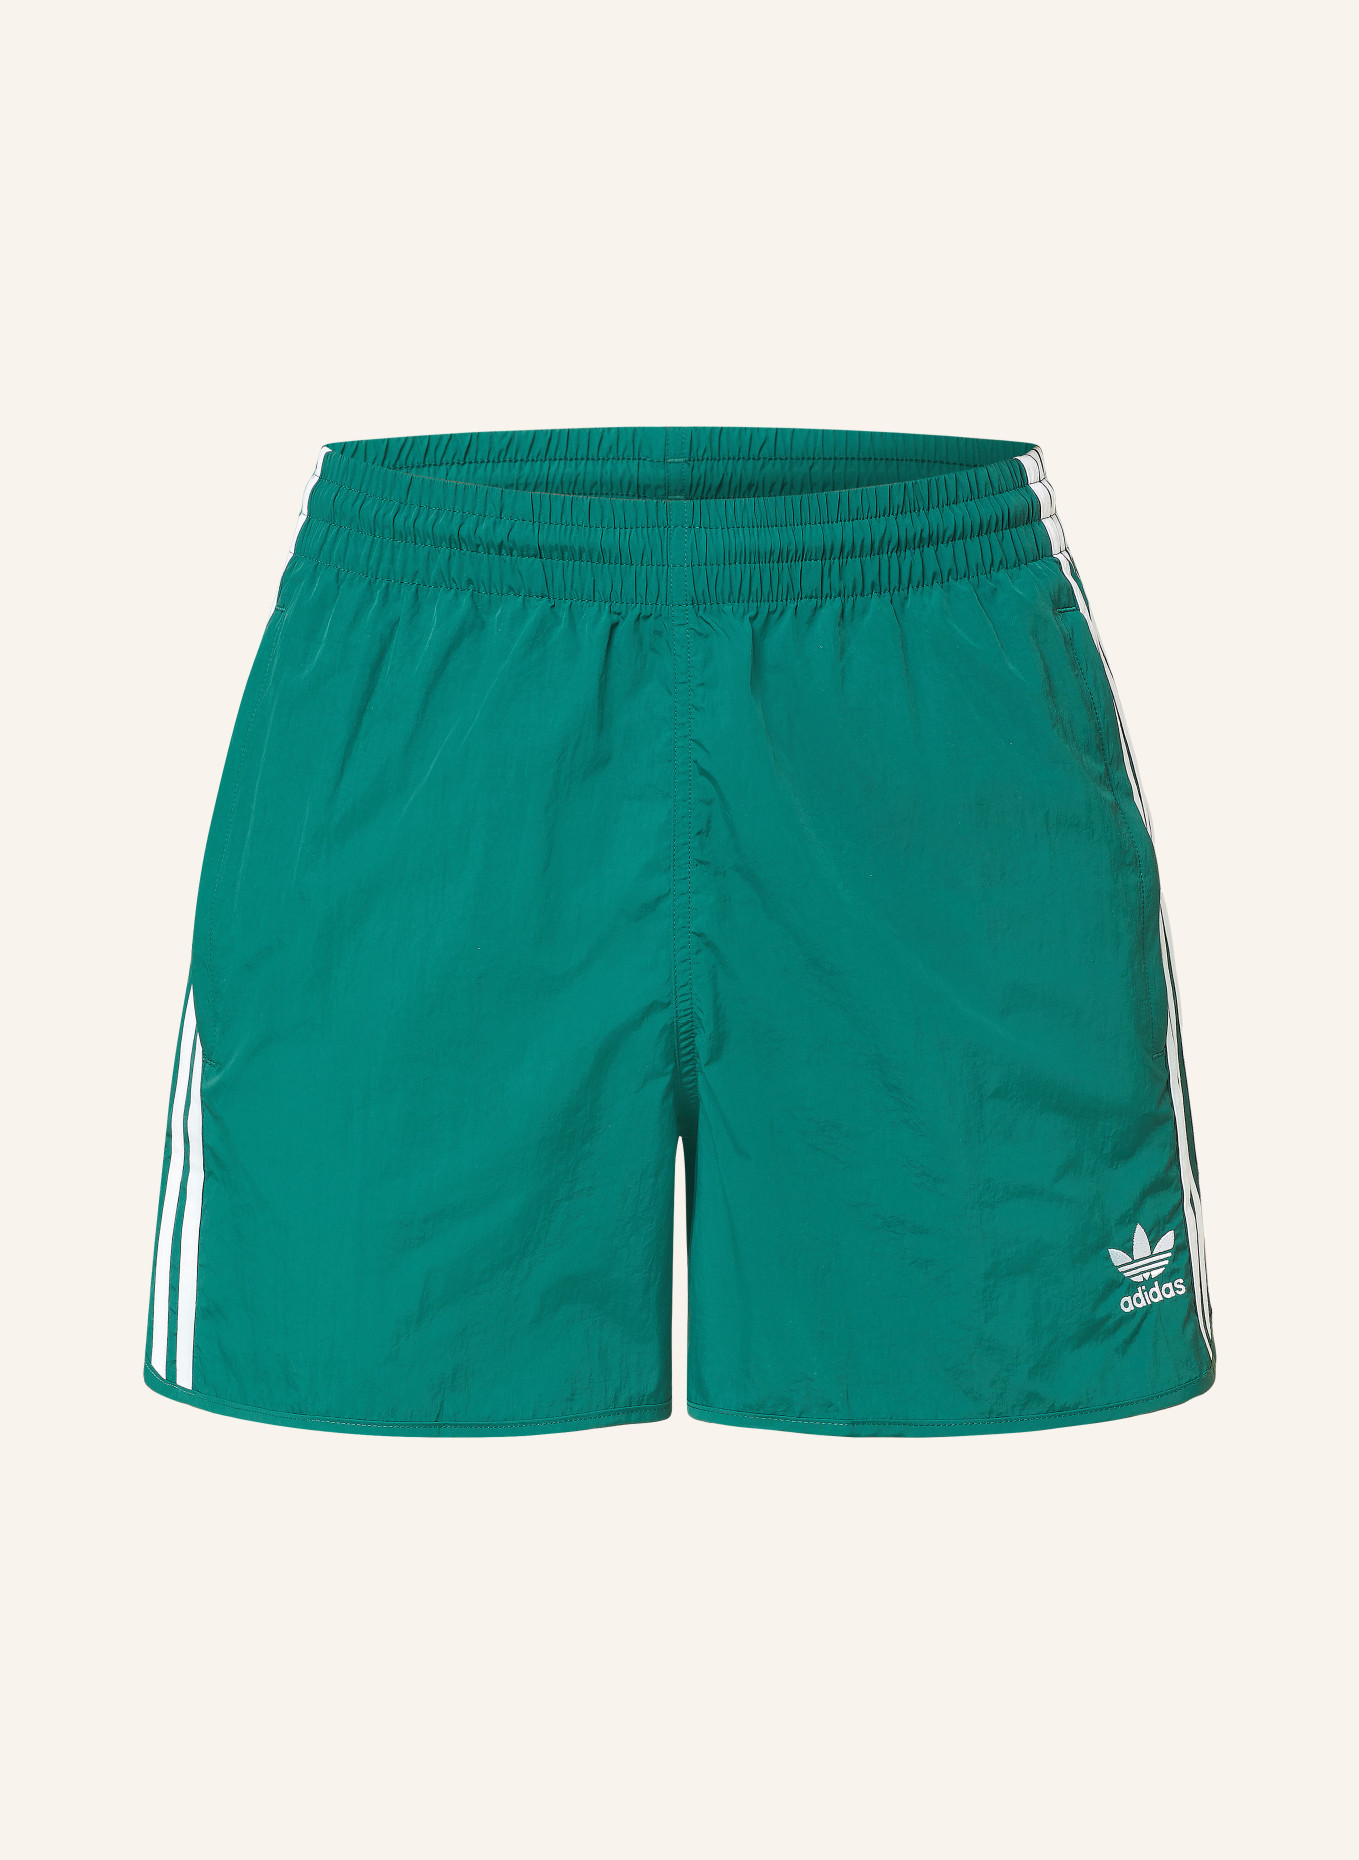 adidas Originals Shorts SPRINTER, Farbe: DUNKELGRÜN (Bild 1)